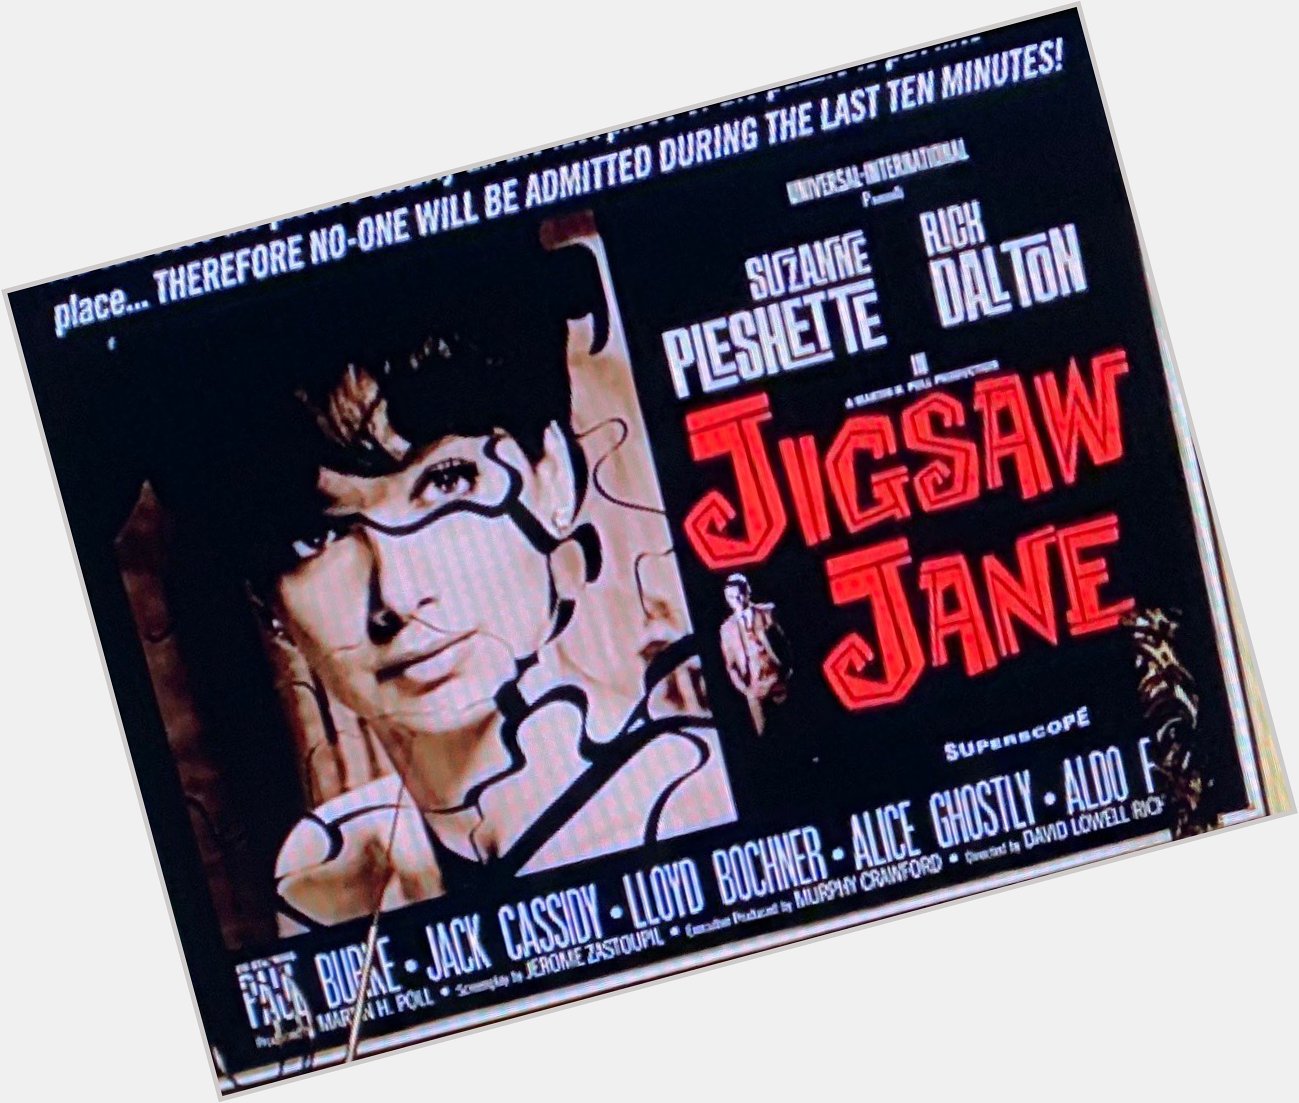 Happy Birthday to Suzanne Pleshette (1937-2008) who starred in JIGSAW JANE with Rick Dalton. 